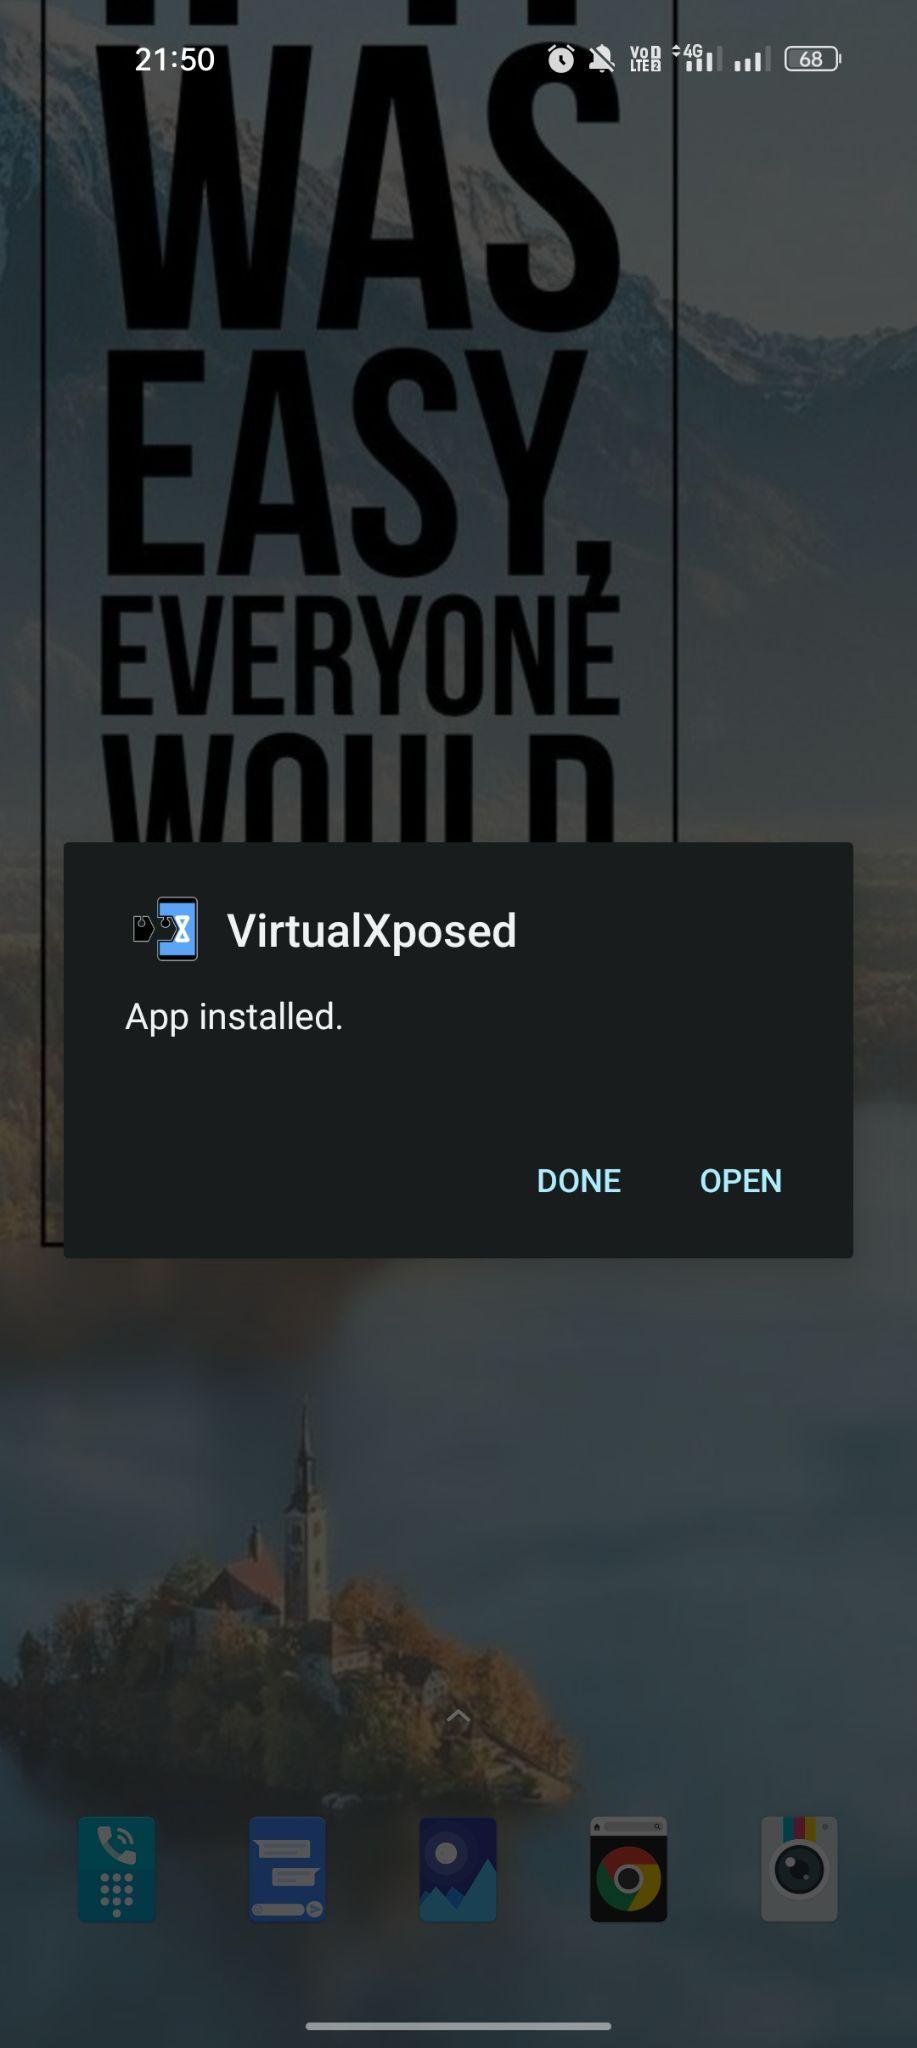 VirtualXposed apk installed